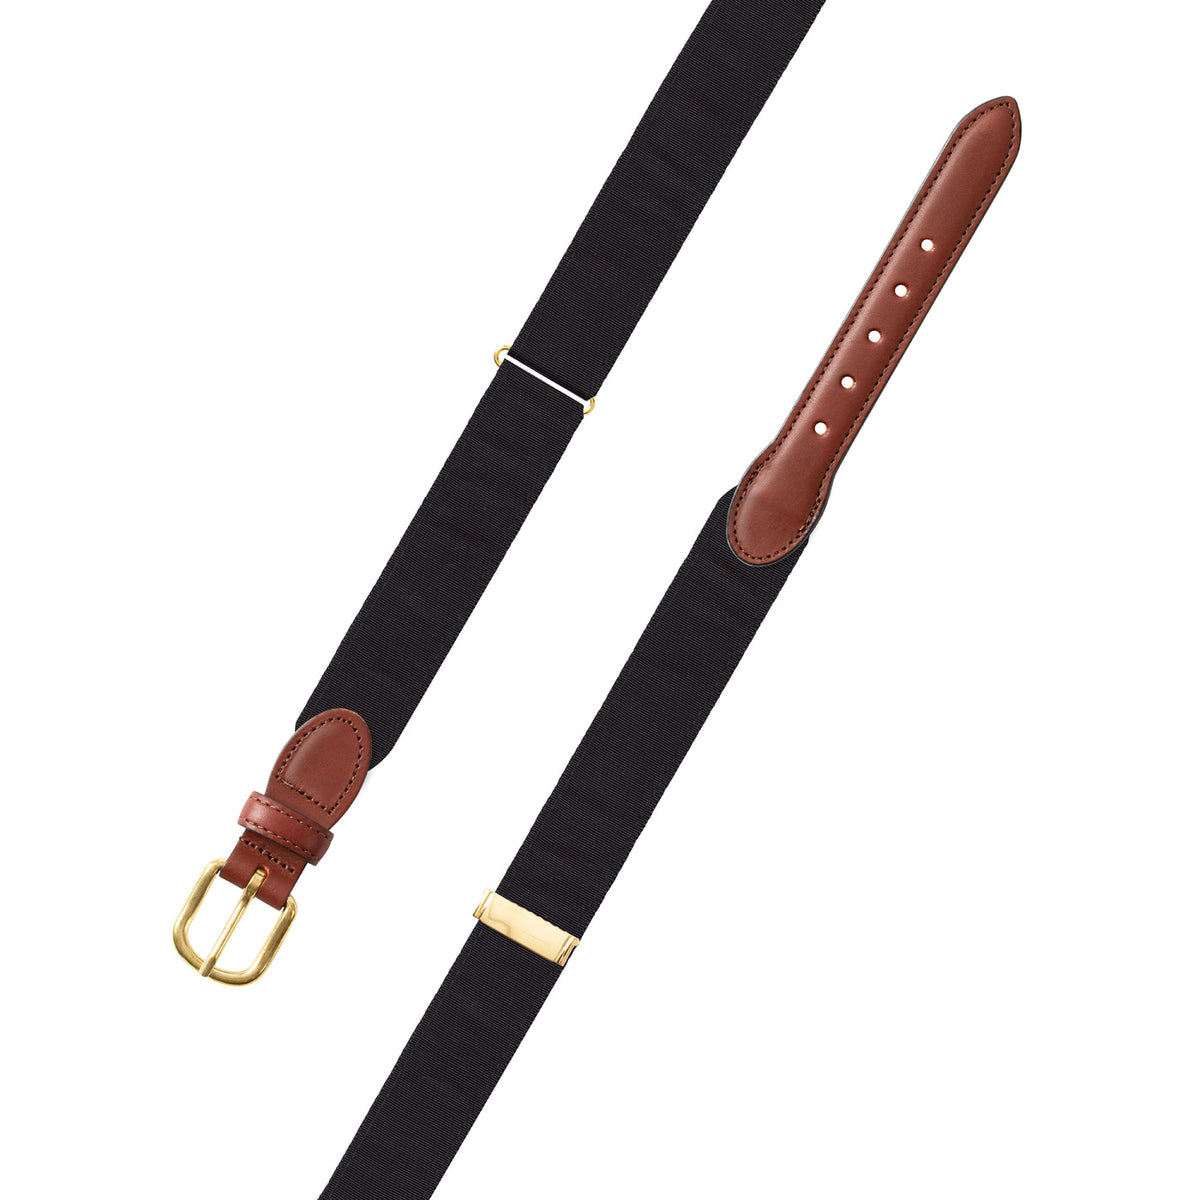 Adjustable Black Grosgrain Belt with Brown Leather Tabs